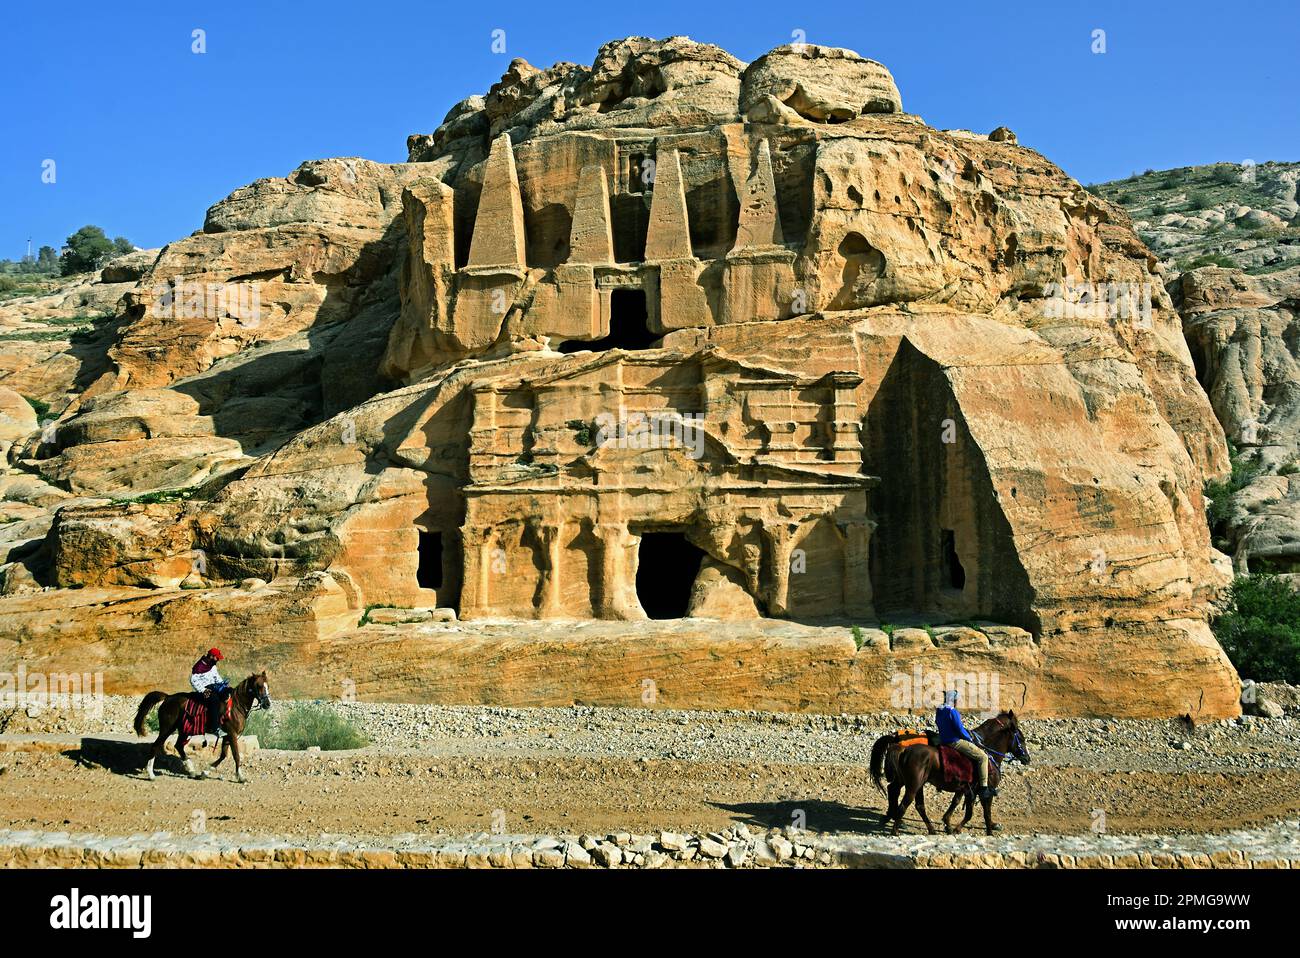 The Obelisk Tomb Petra city Nabataean caravan-city rock-cut façades Jordan carved sandstone rock desert. Stock Photo